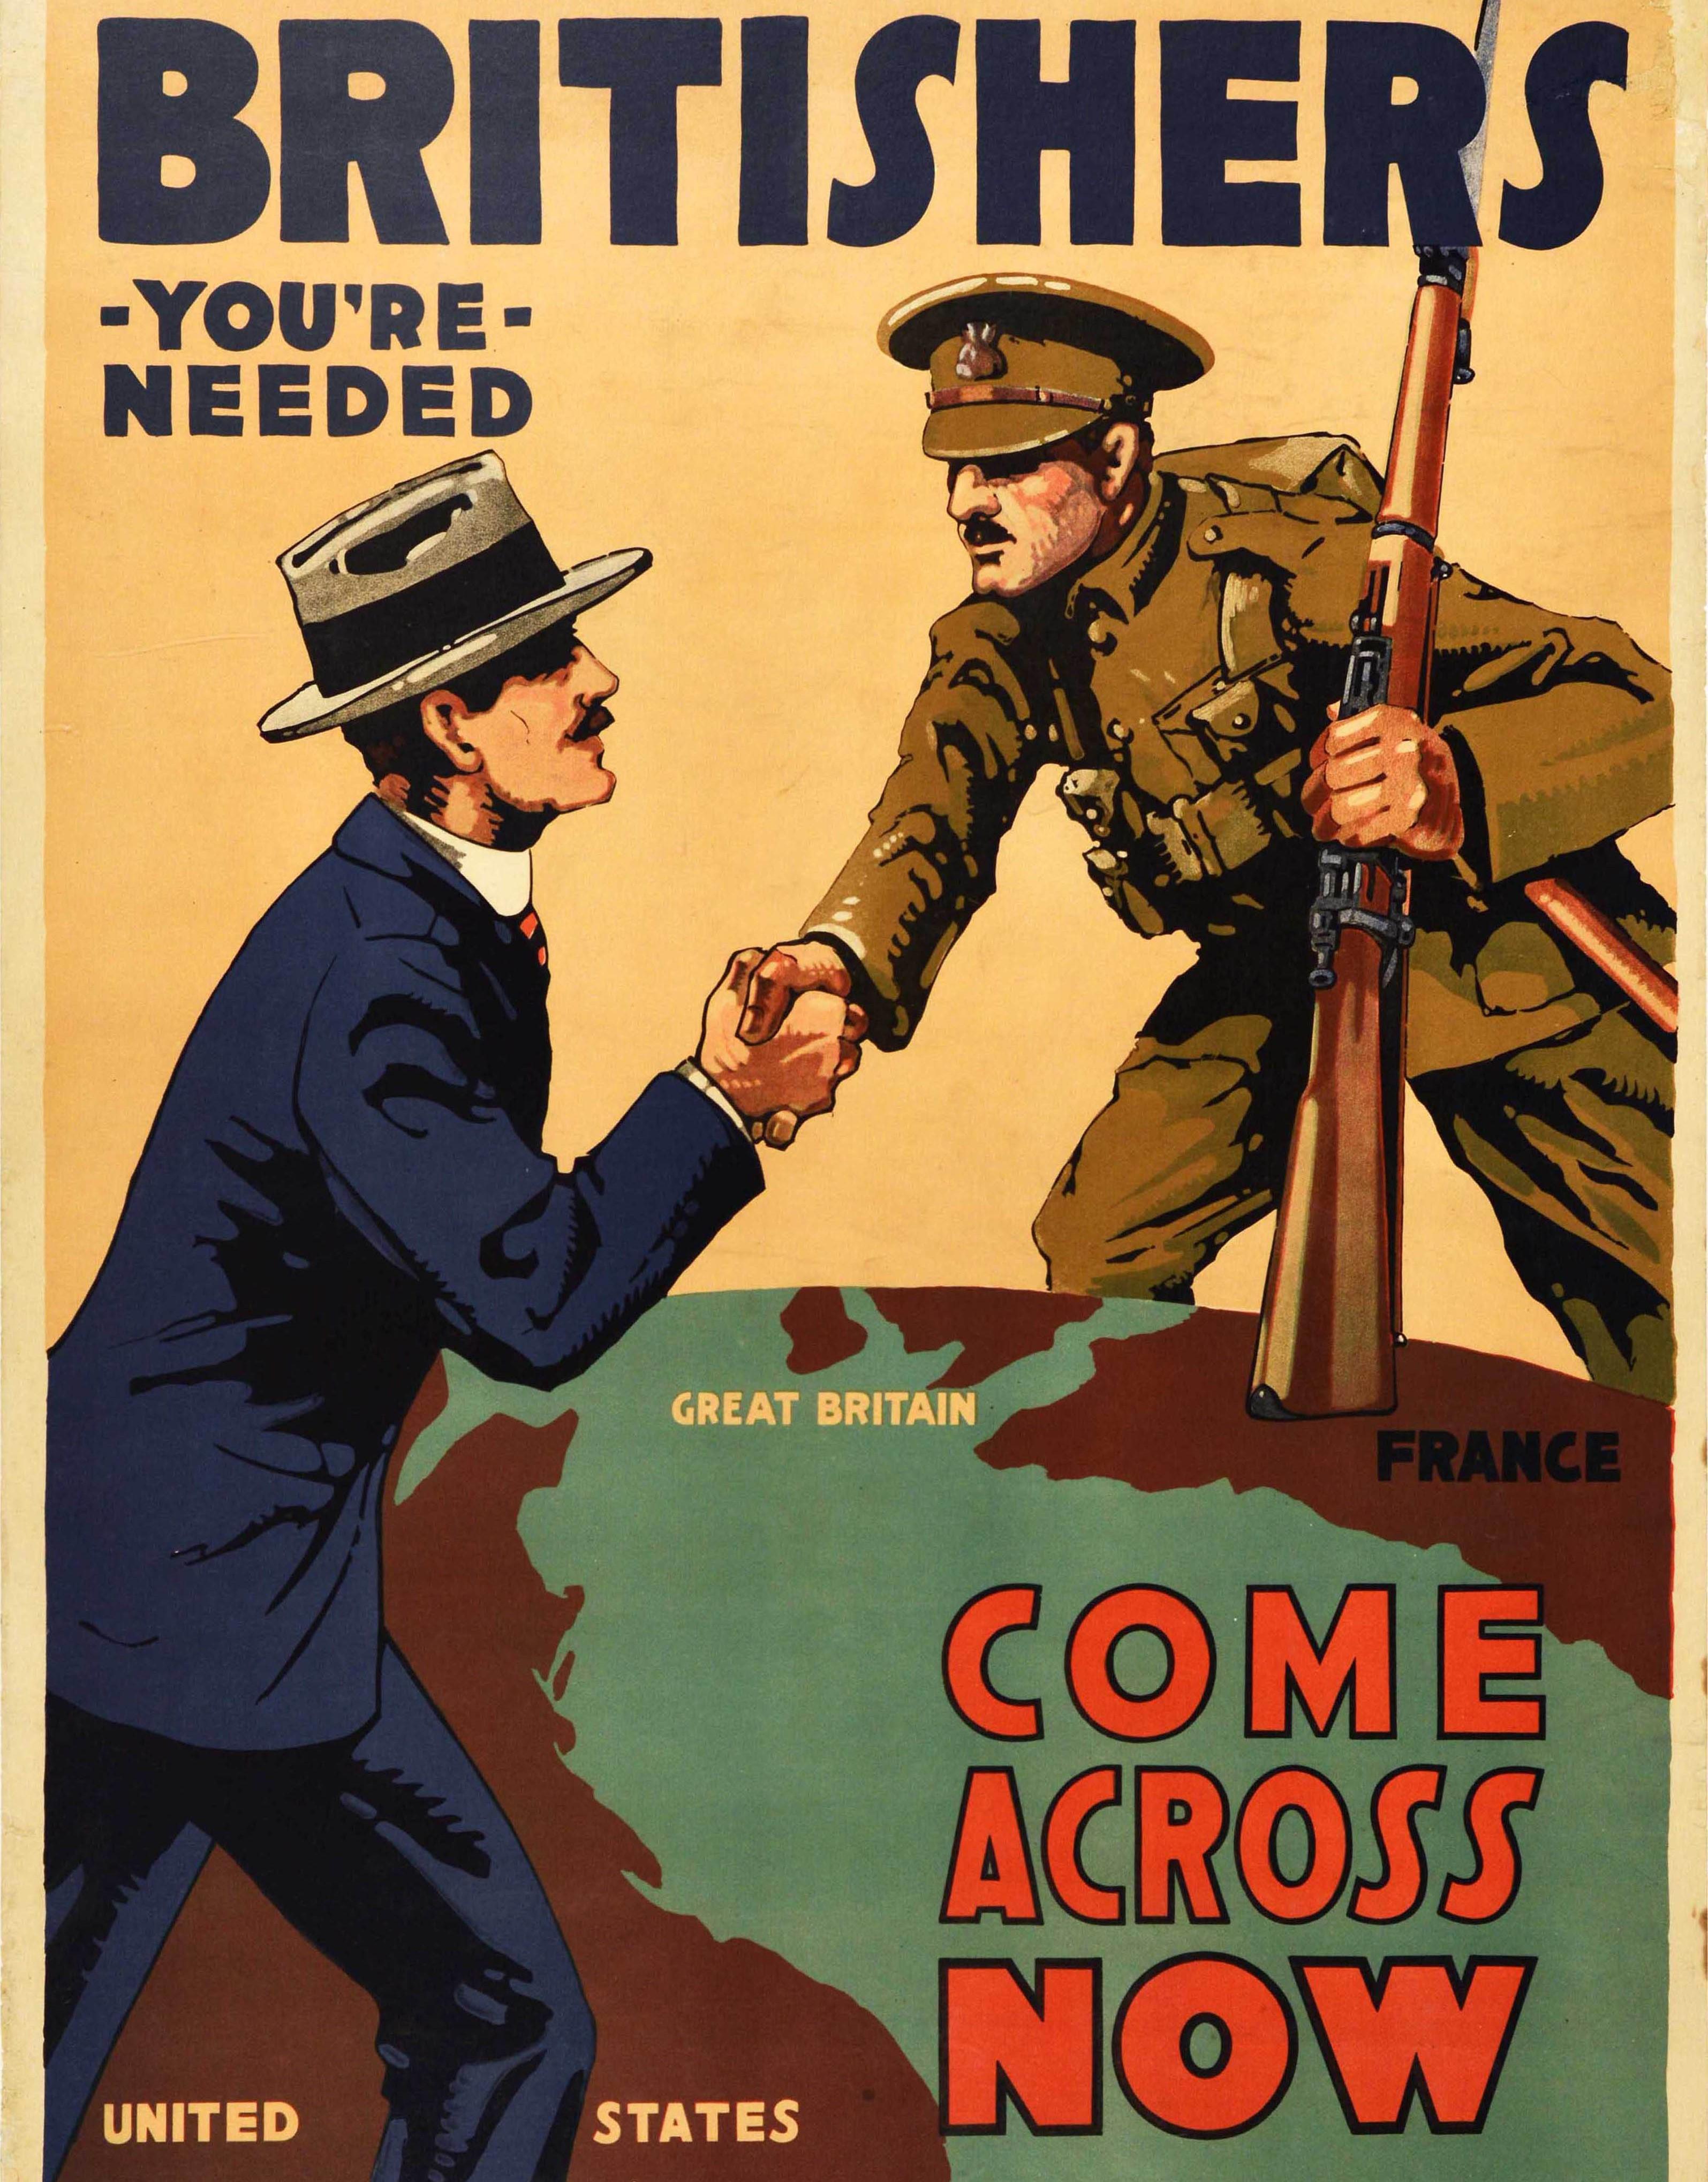 world war 1 propaganda posters